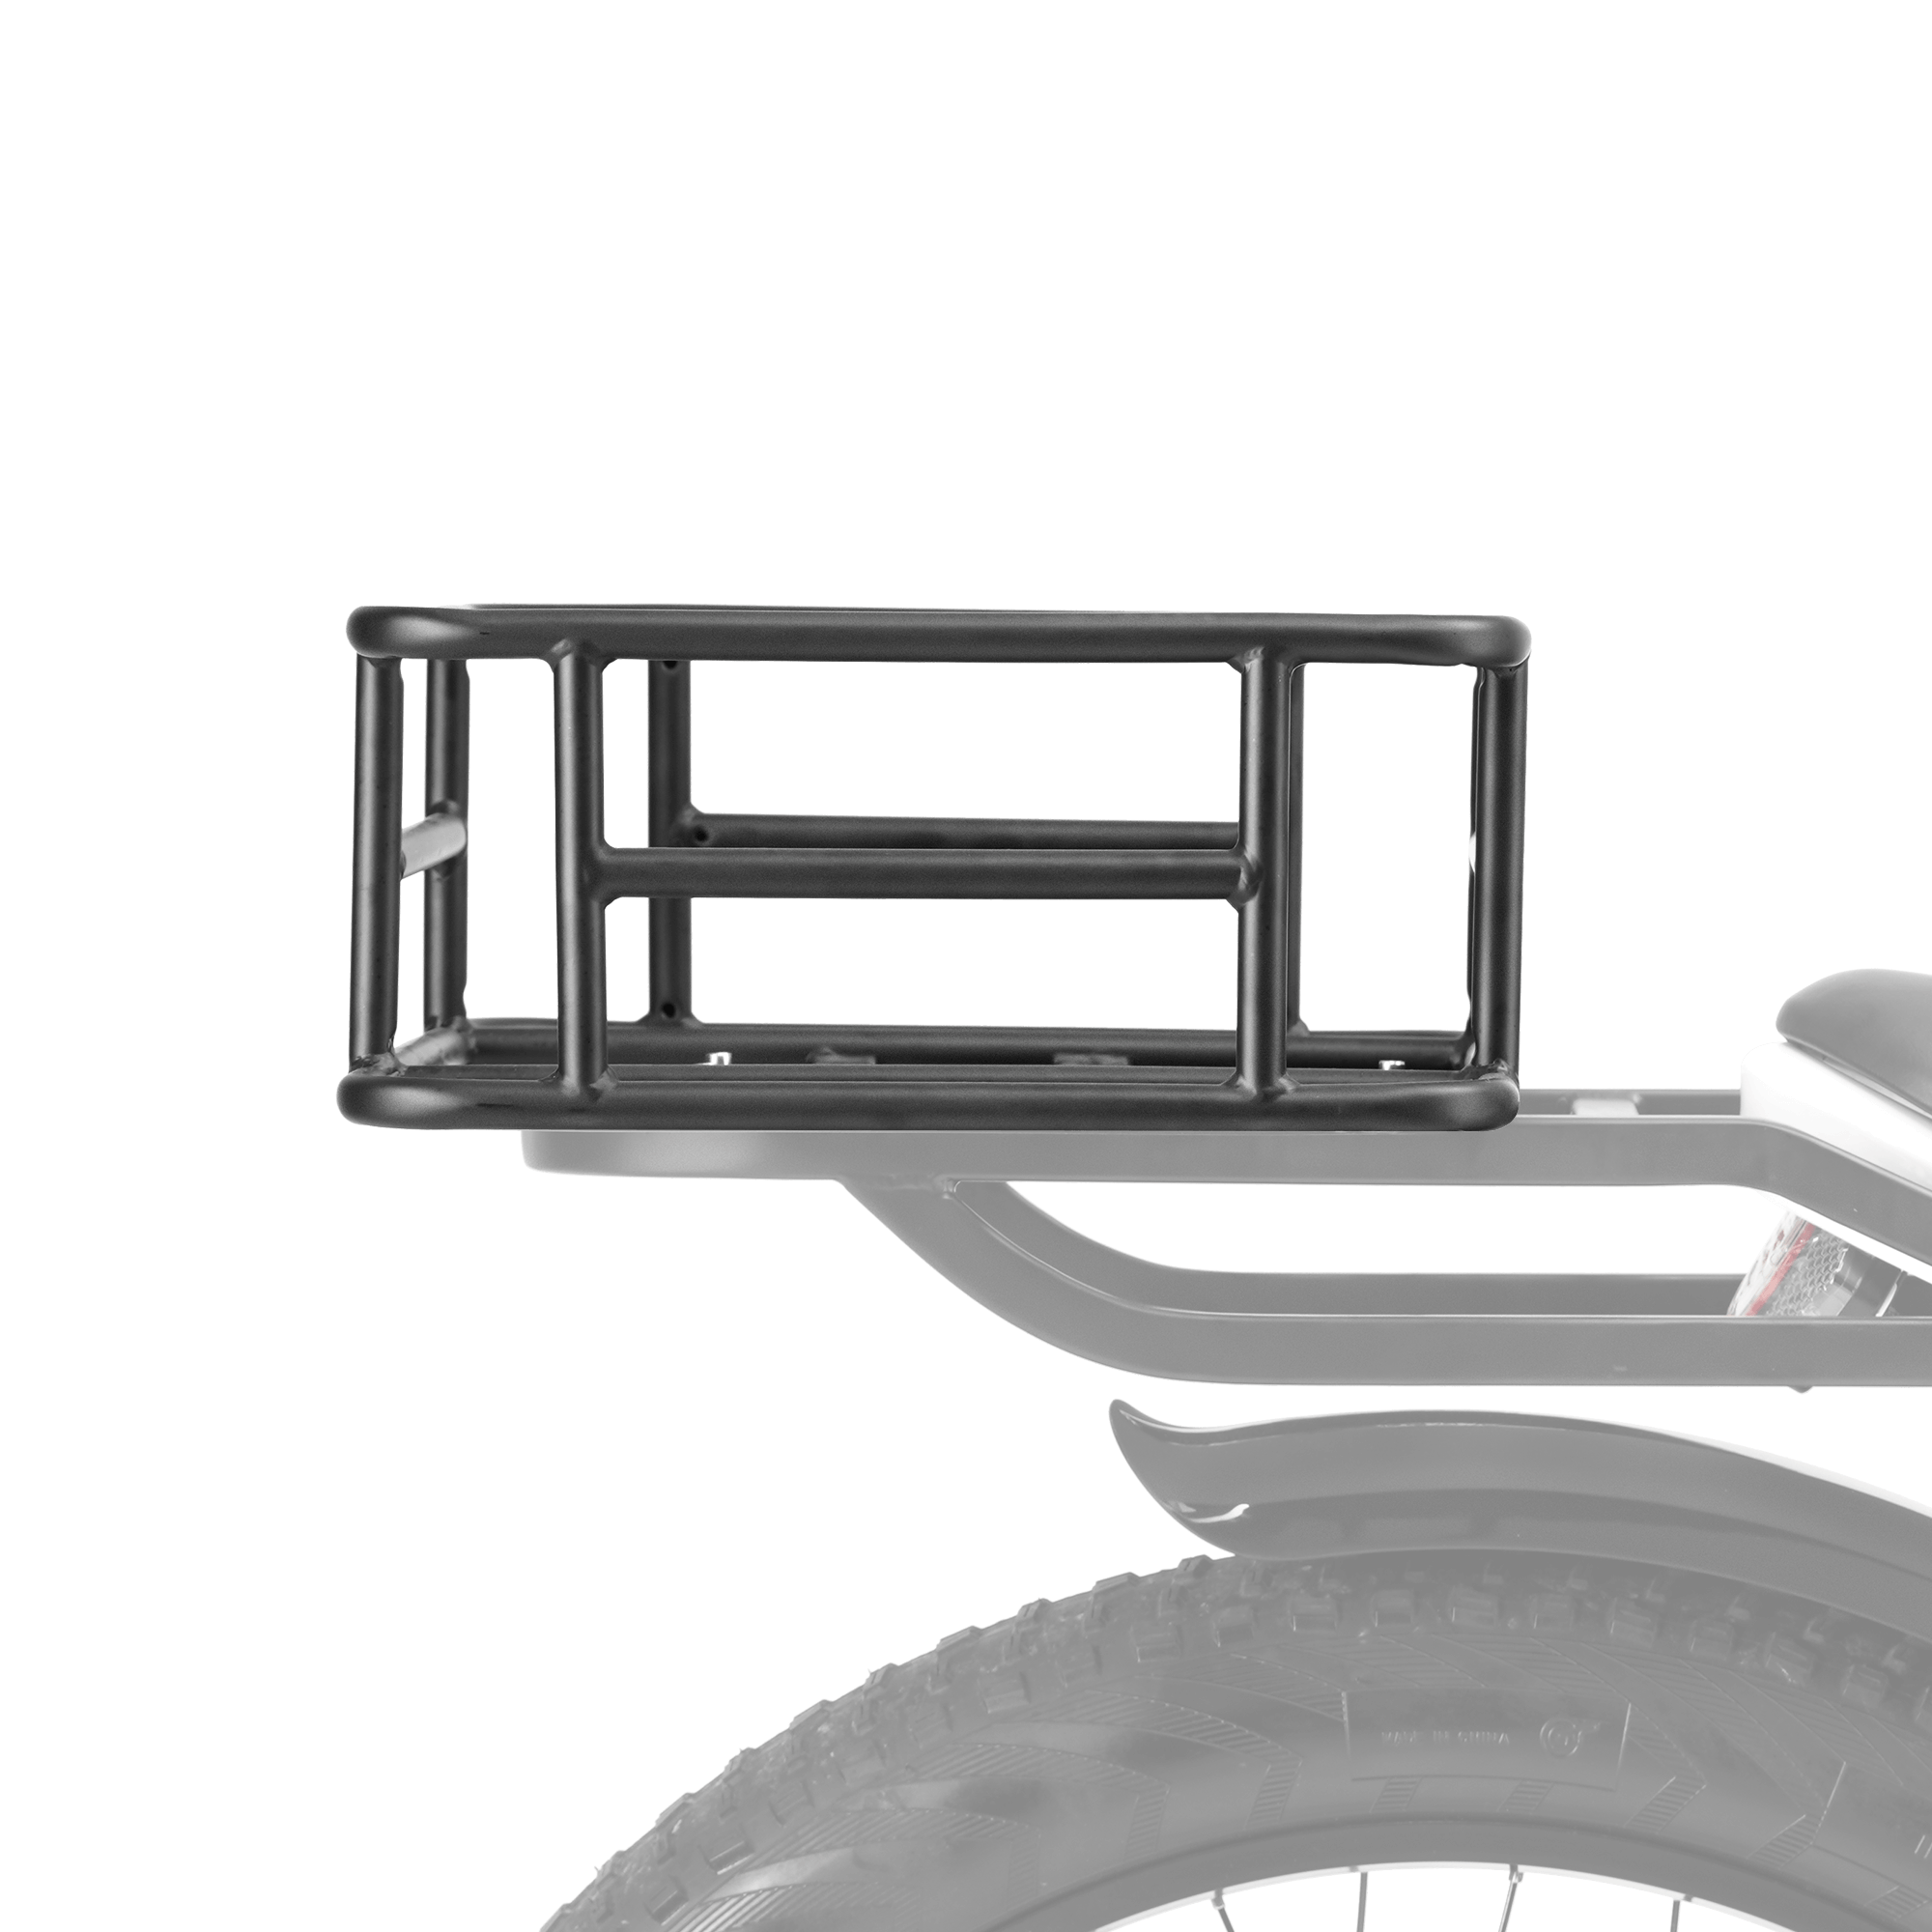  Simhoa Folding Bike Frame Basket, Bike Cargo Rack